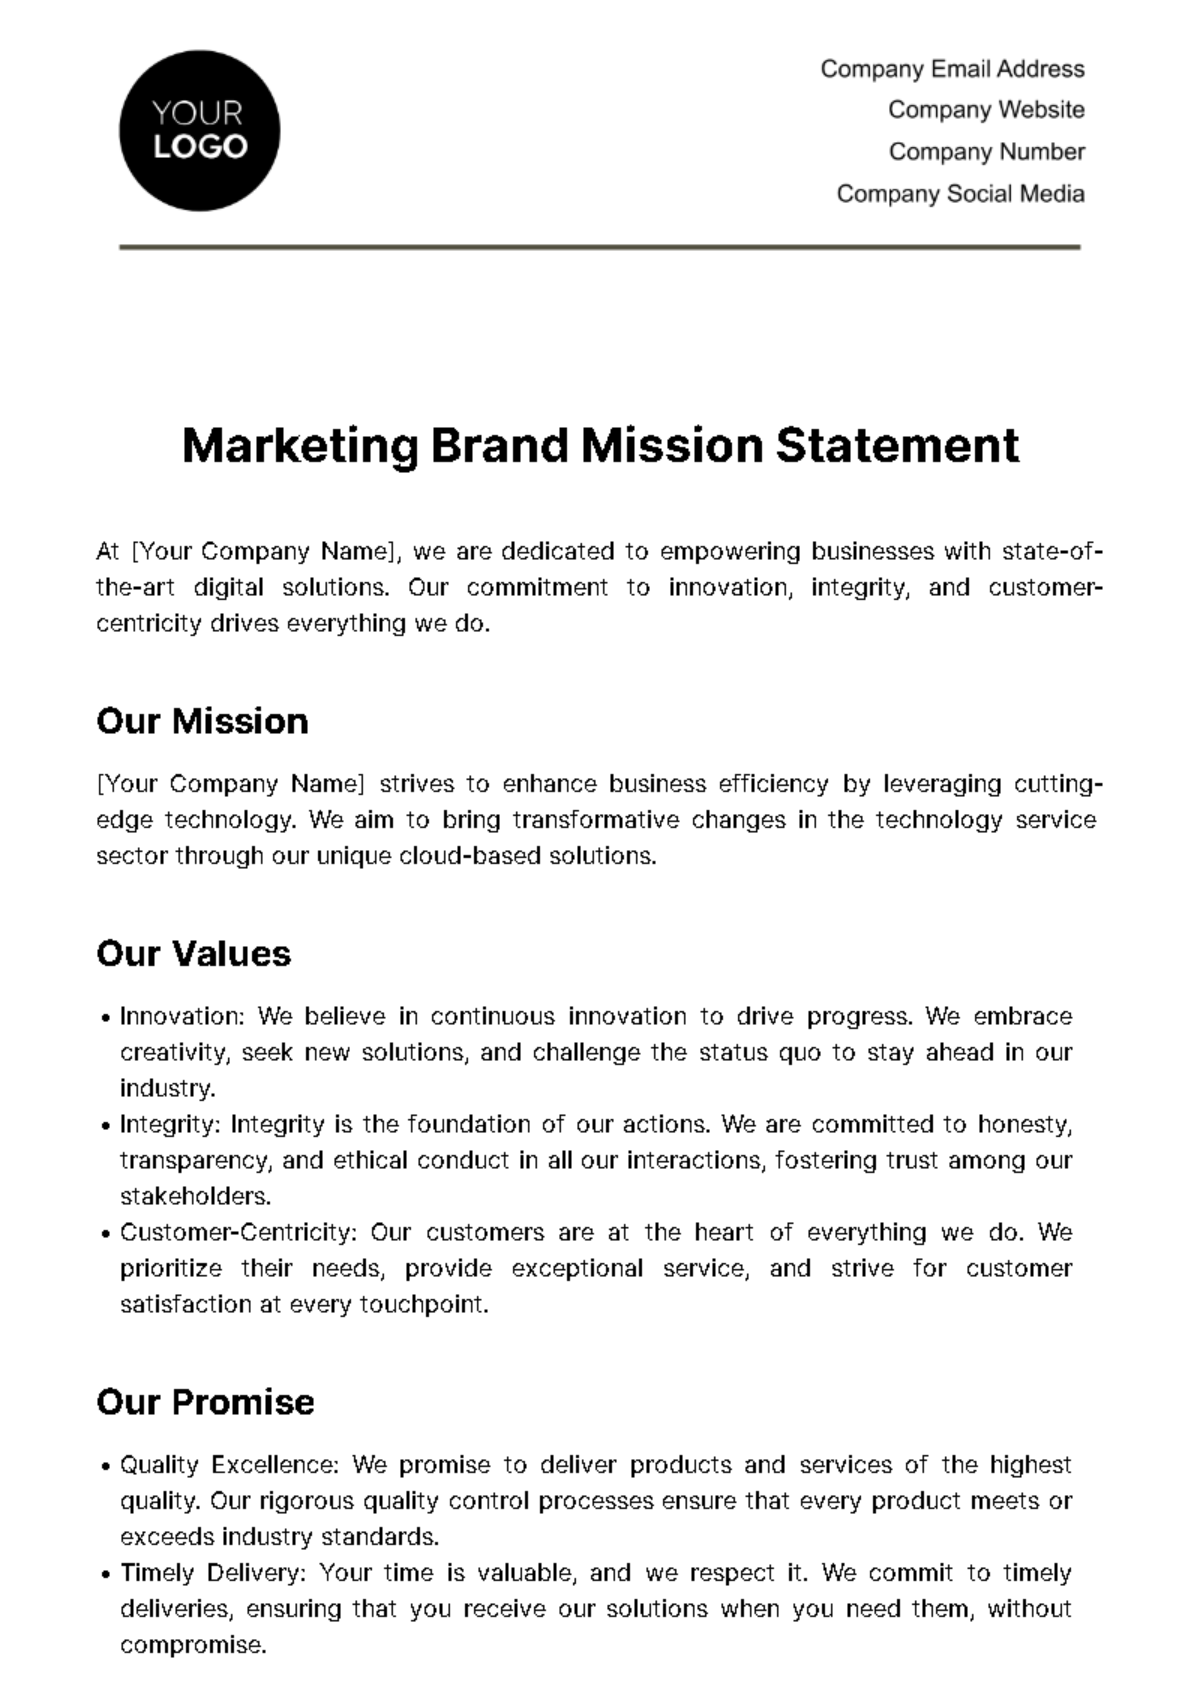 Free Marketing Brand Mission Statement Template